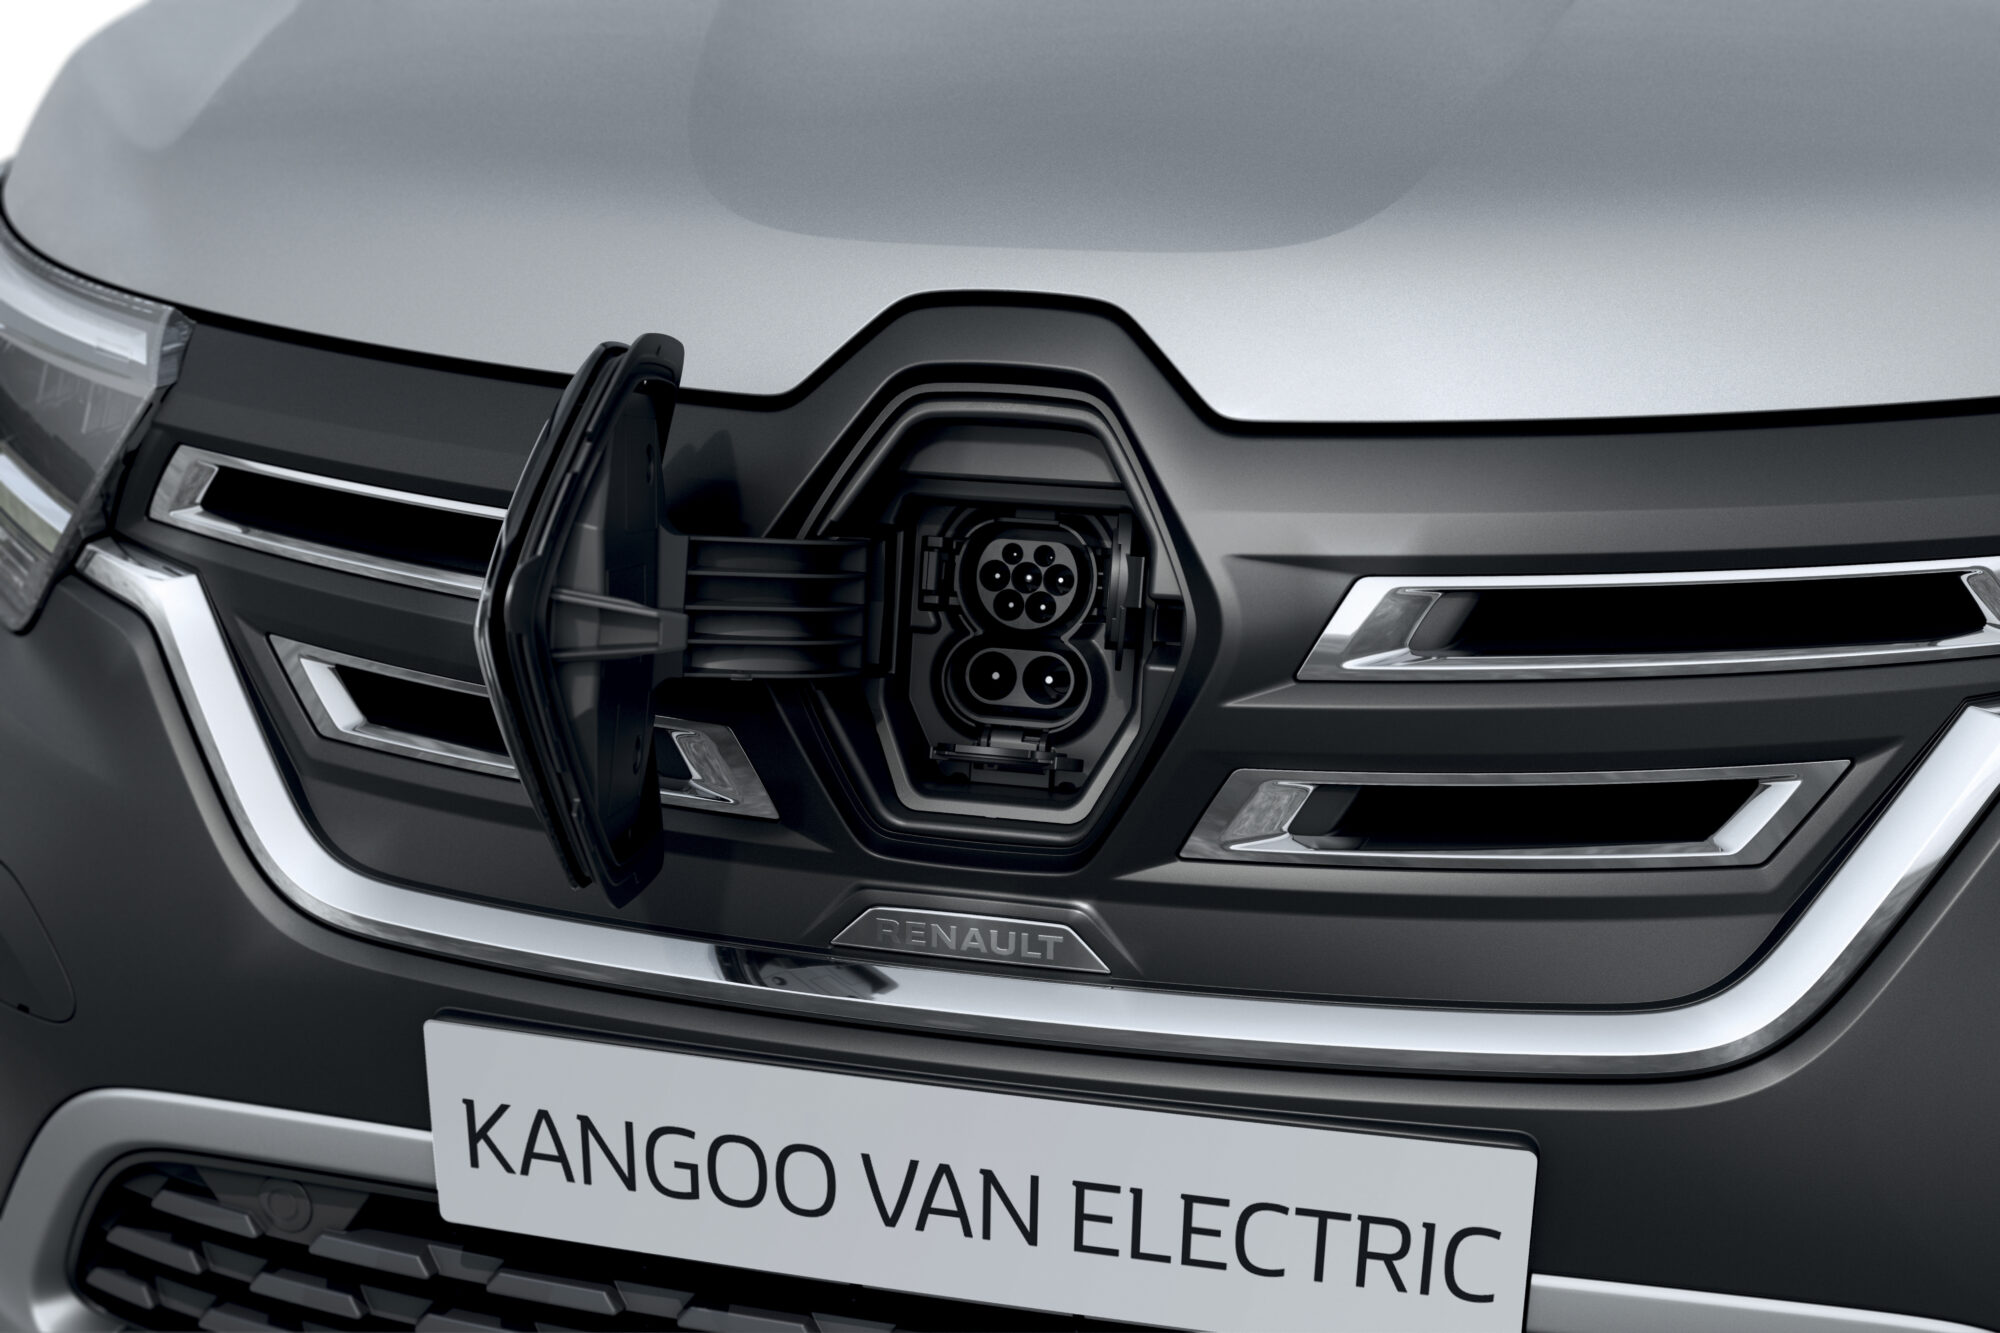 2021 - Nouveau Renault Kangoo Van E-TECH Electrique